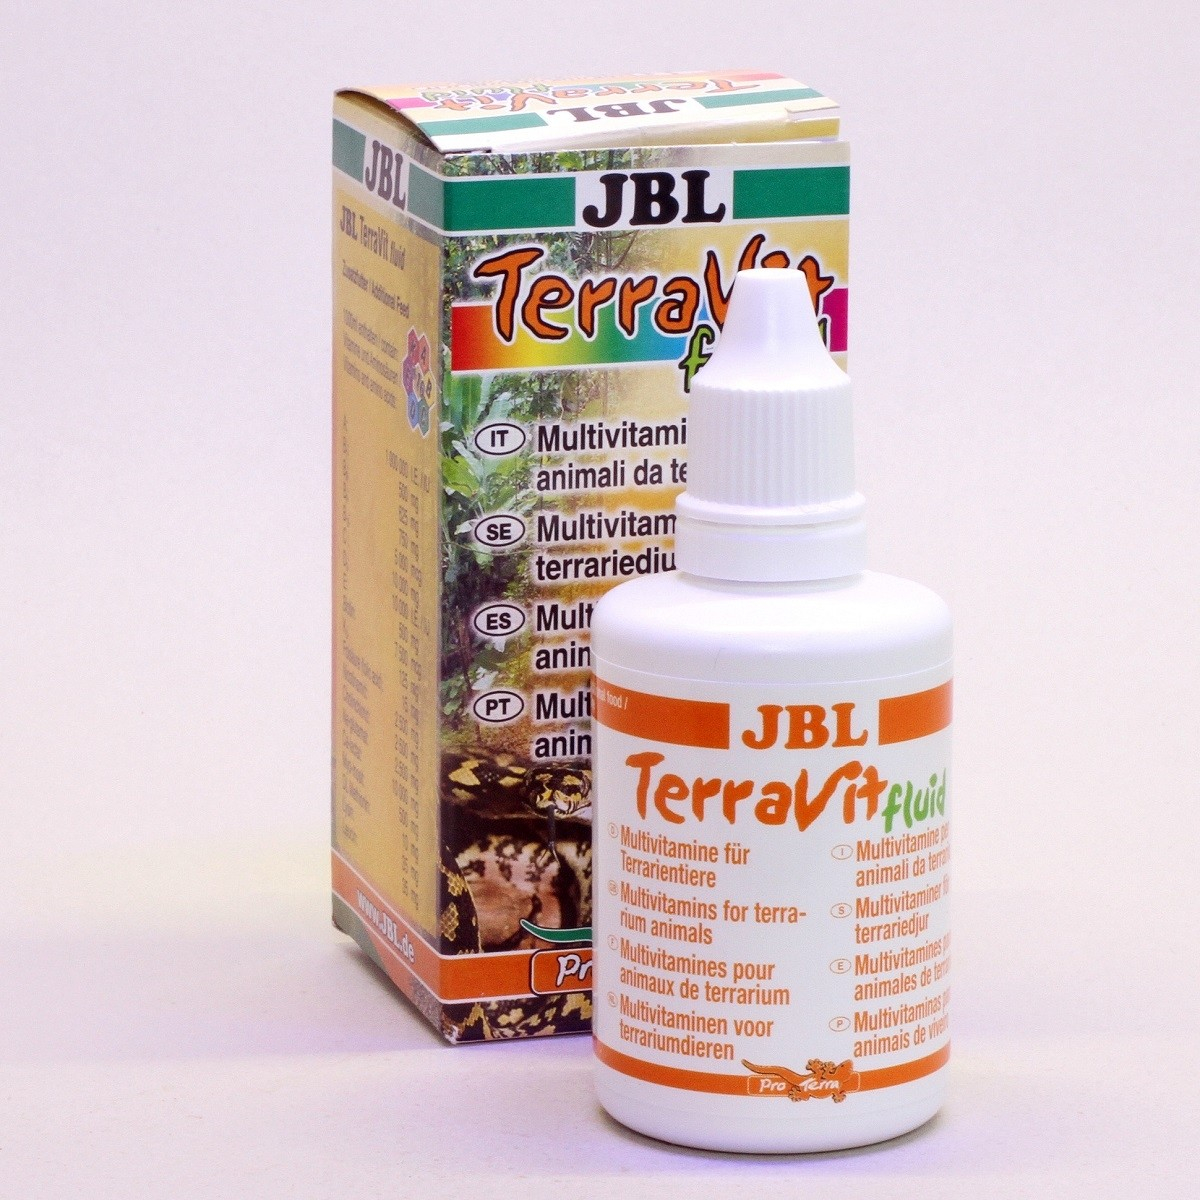 JBL TerraVit fluid Vitaminas y oligoelementos para reptiles